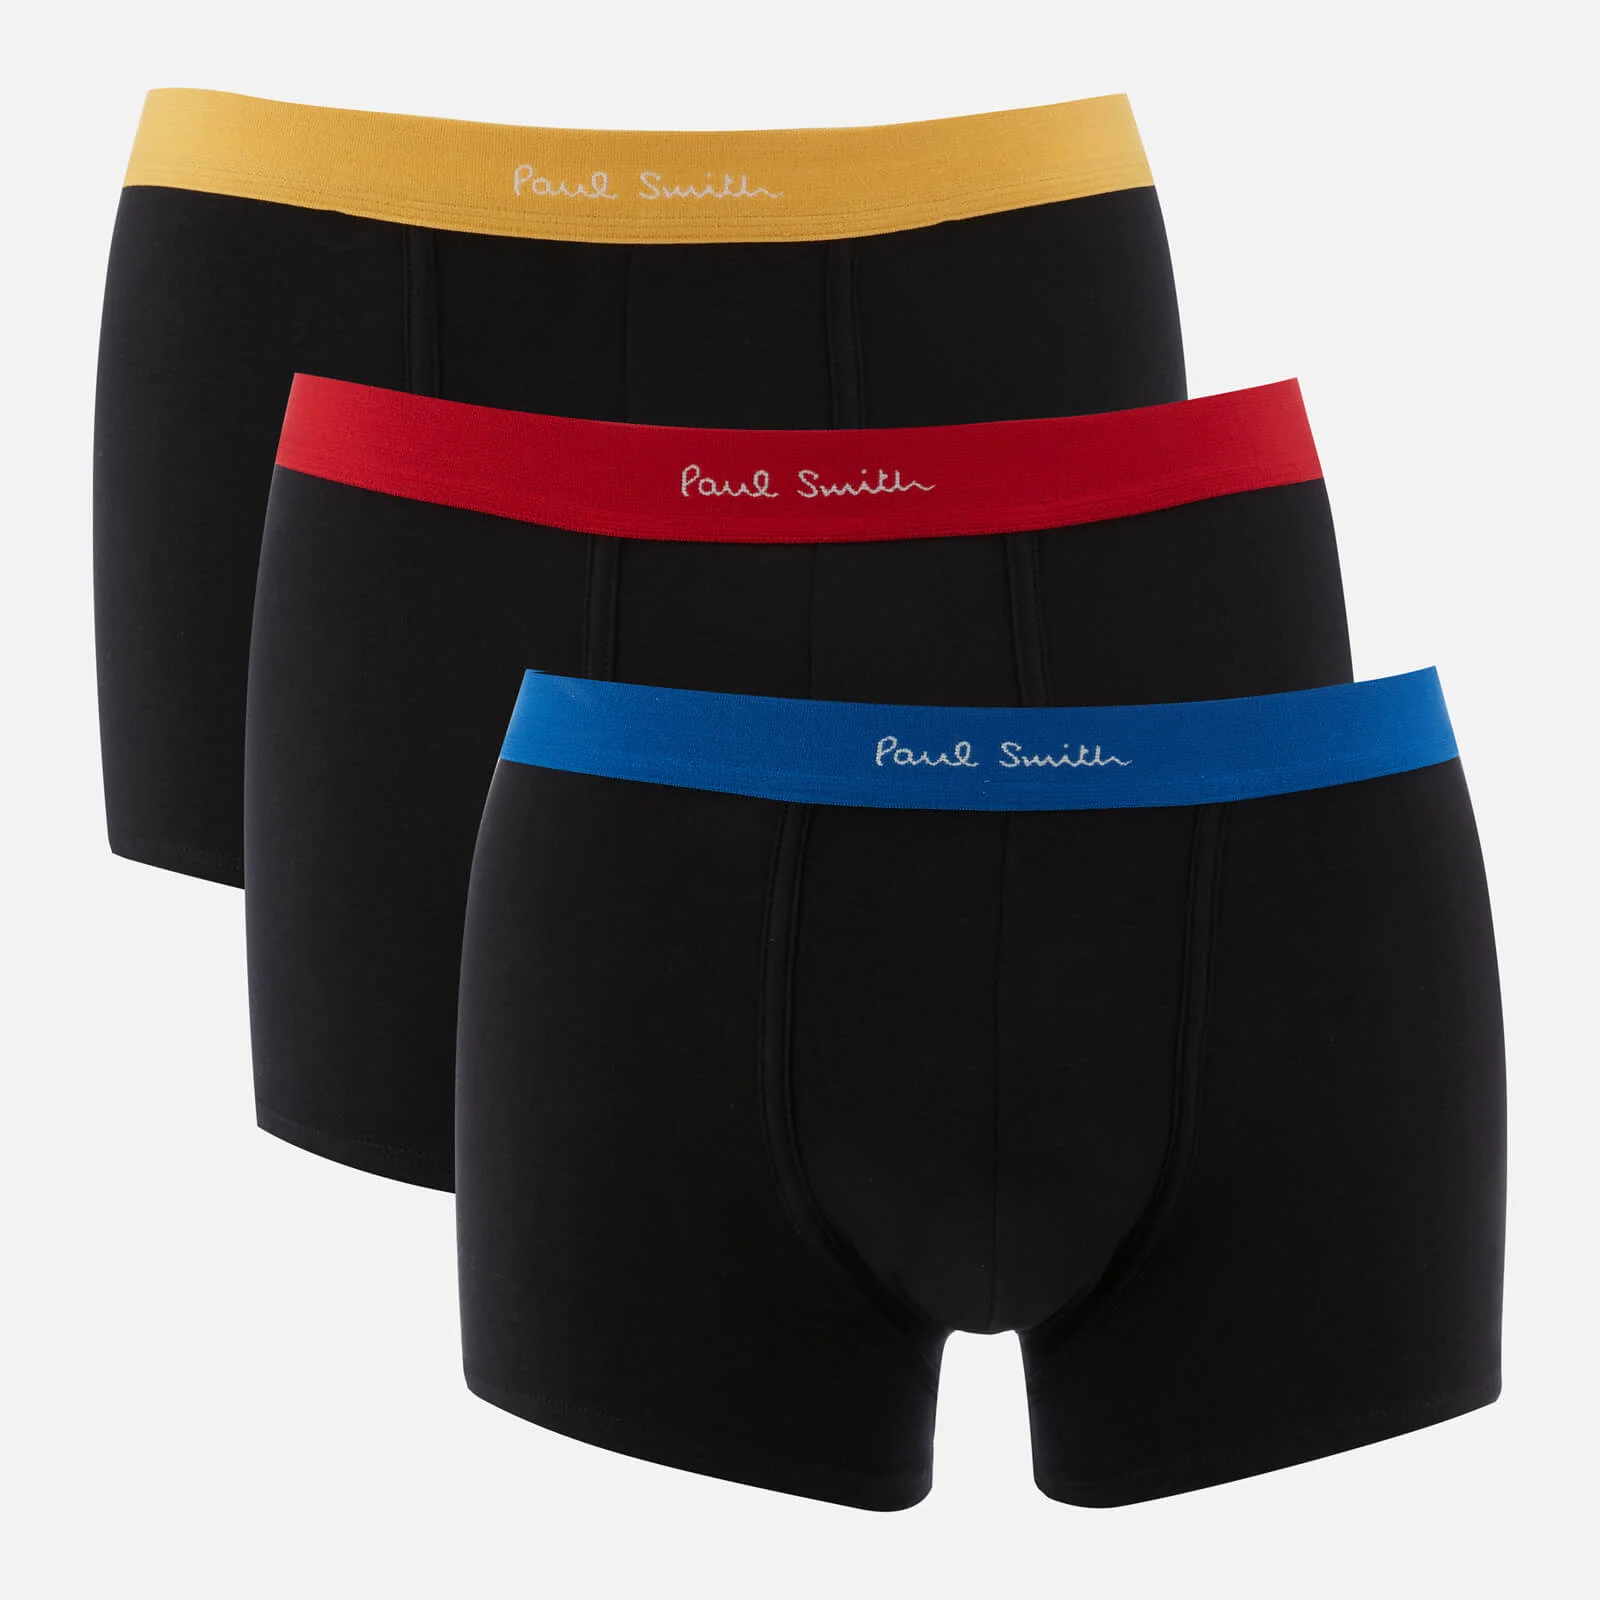 Paul Smith Men's Three Pack Waist Band Detail Trunk Boxer Shorts - Black Image 1